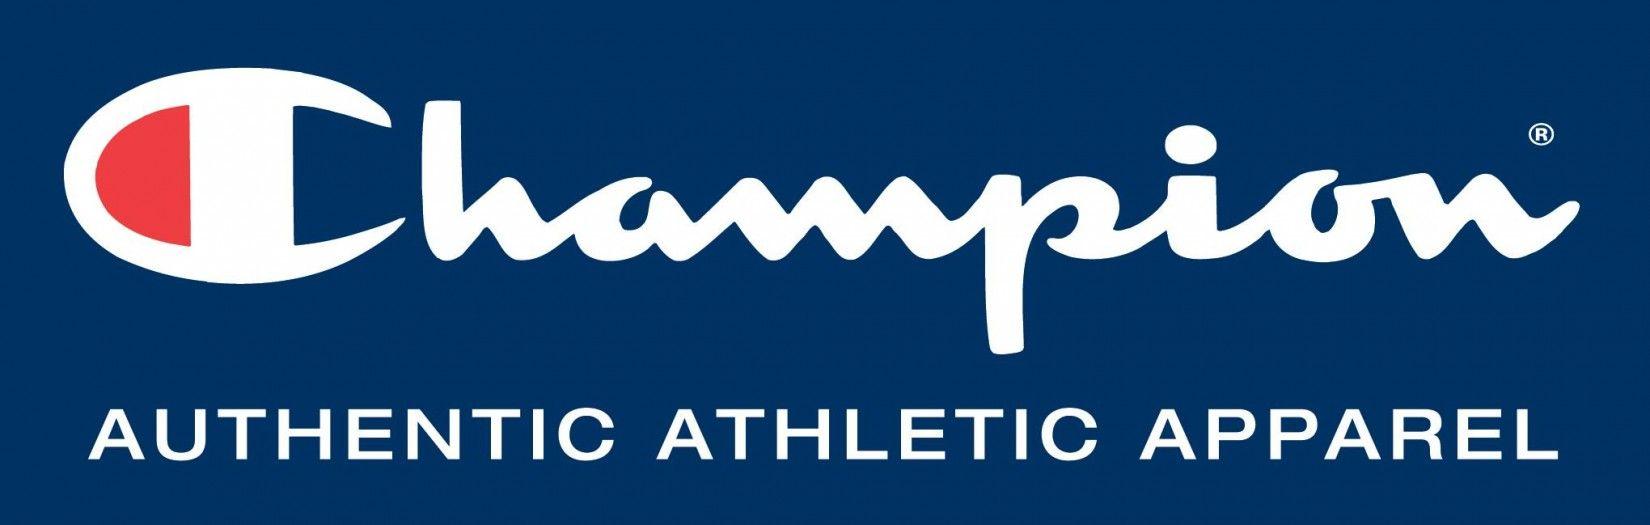 Champion Sportswear Logo - Champion USA font - forum | dafont.com